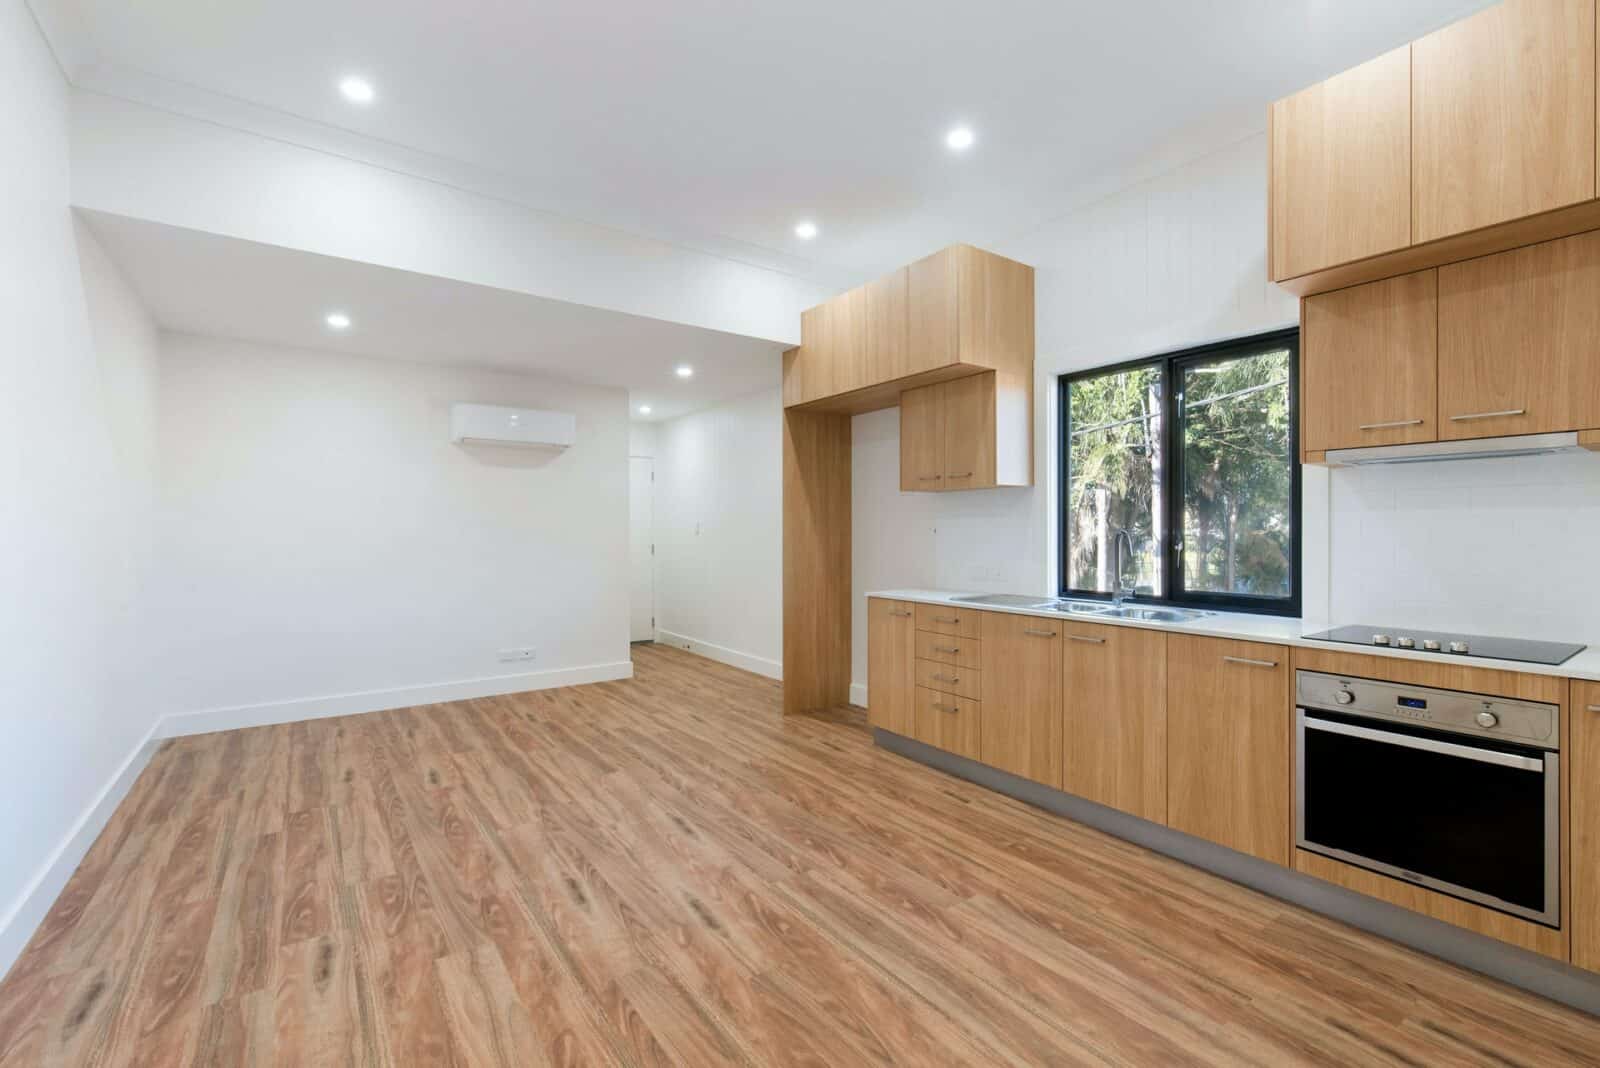 inexpensive kitchen flooring options